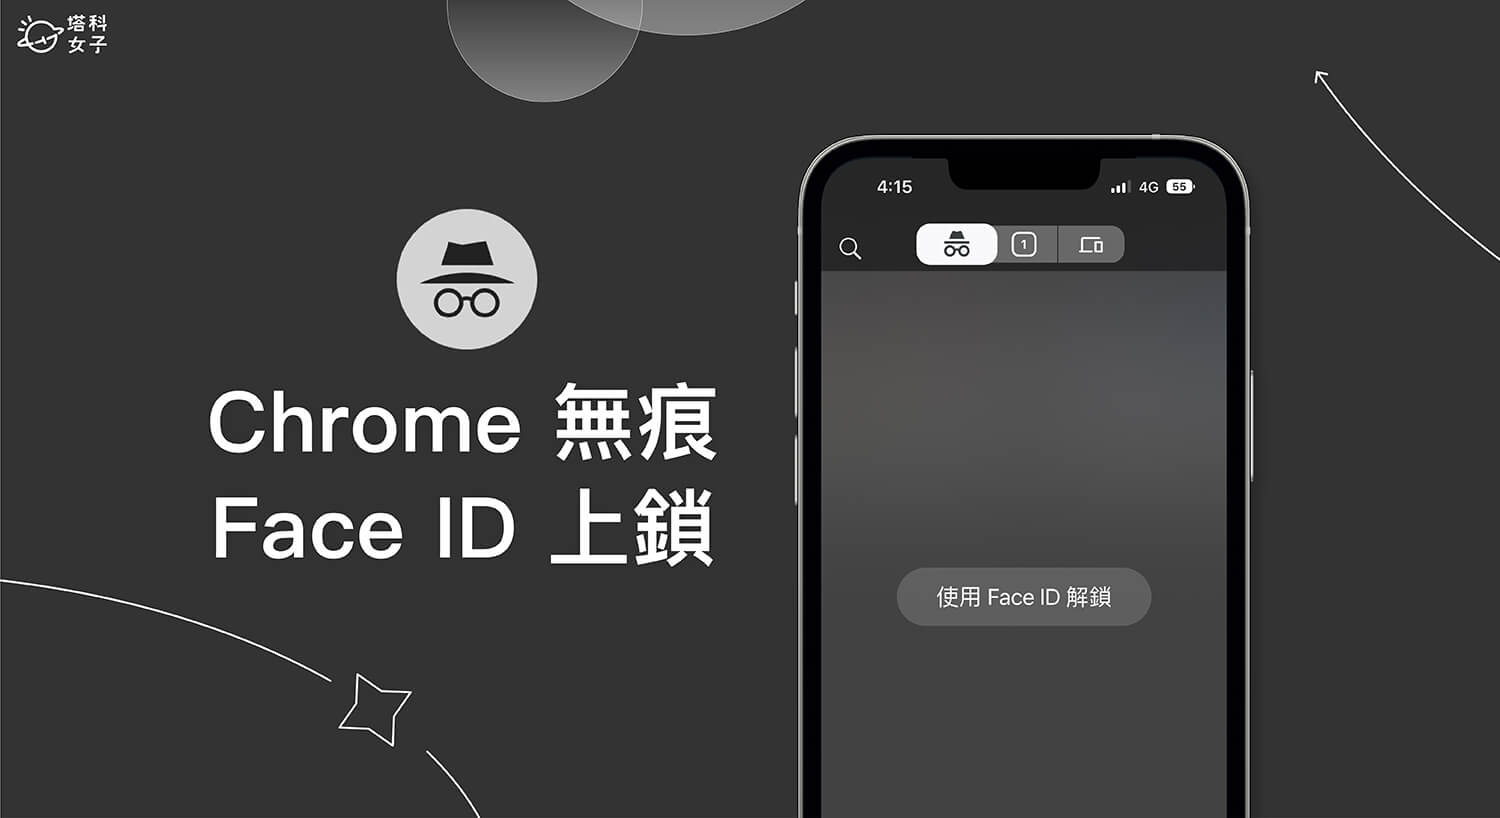 Chrome 無痕模式 Face ID 鎖定功能可保護個人私密瀏覽隱私